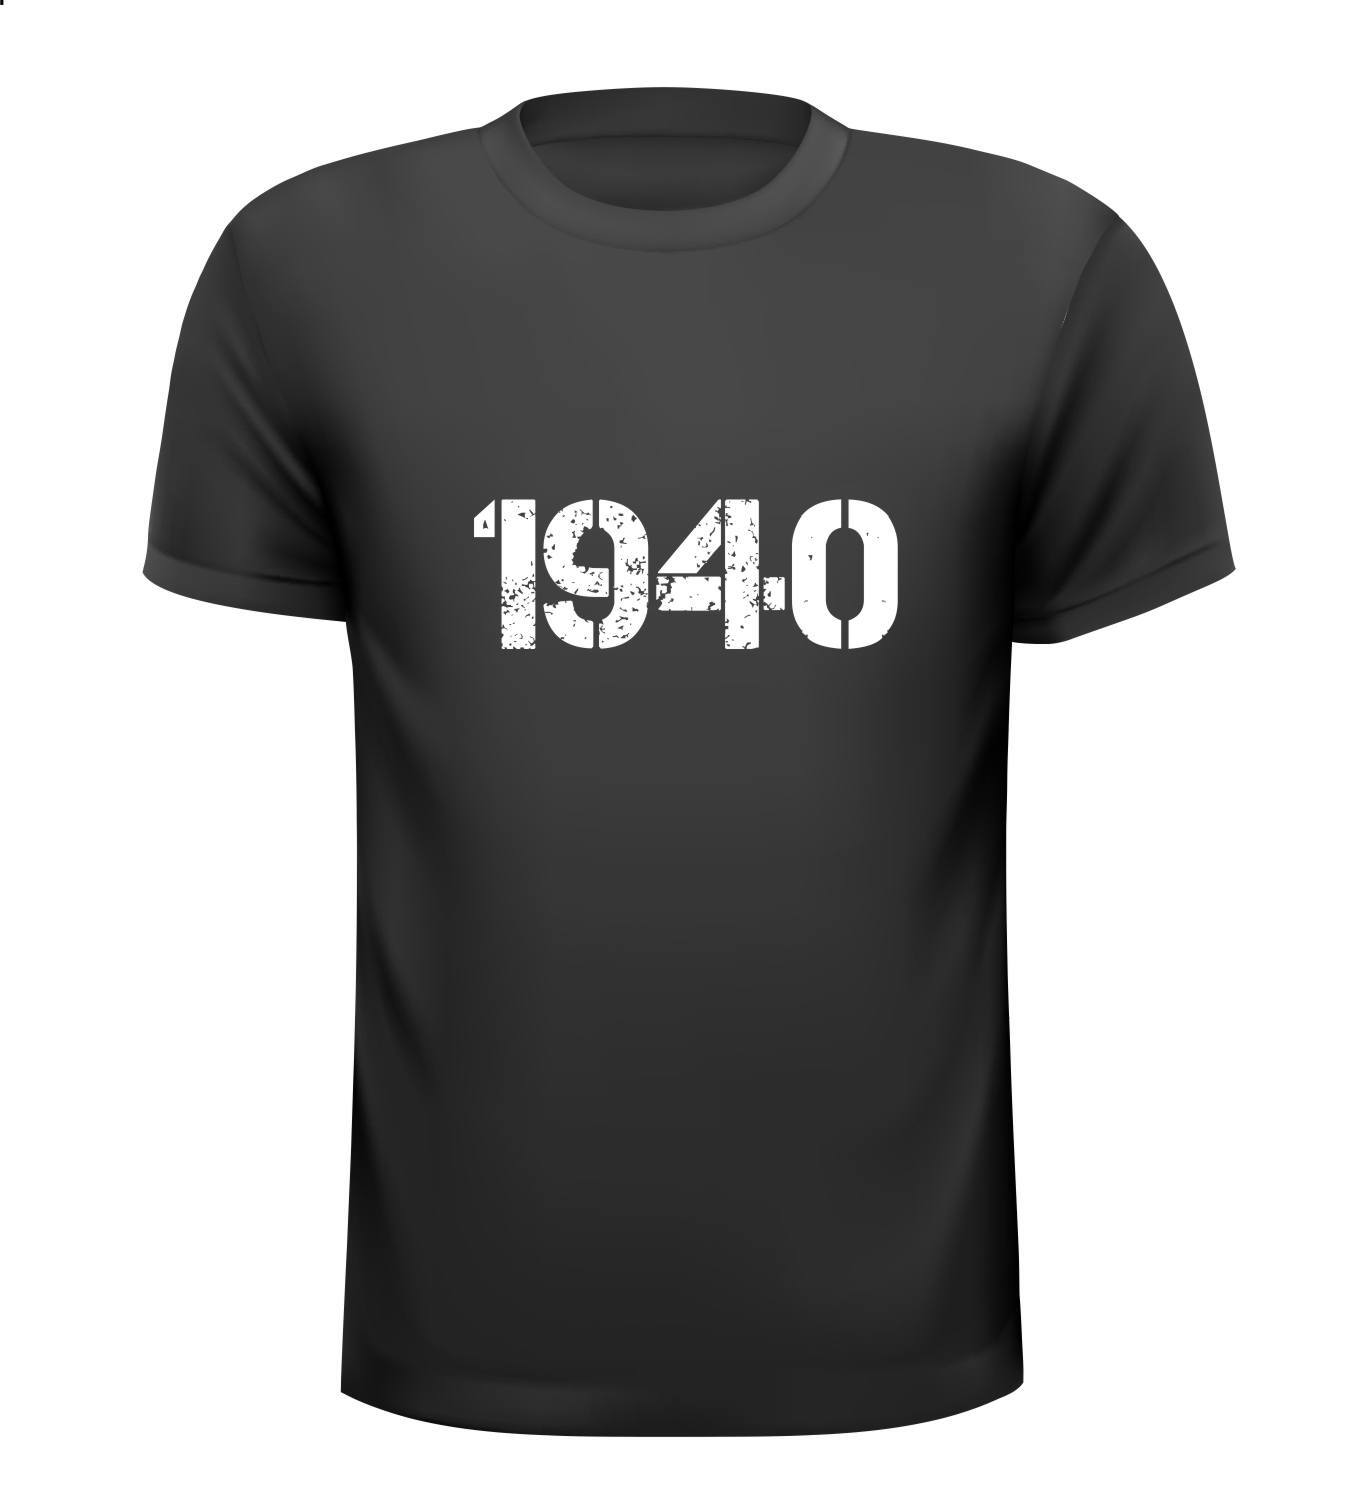 1940 shirt